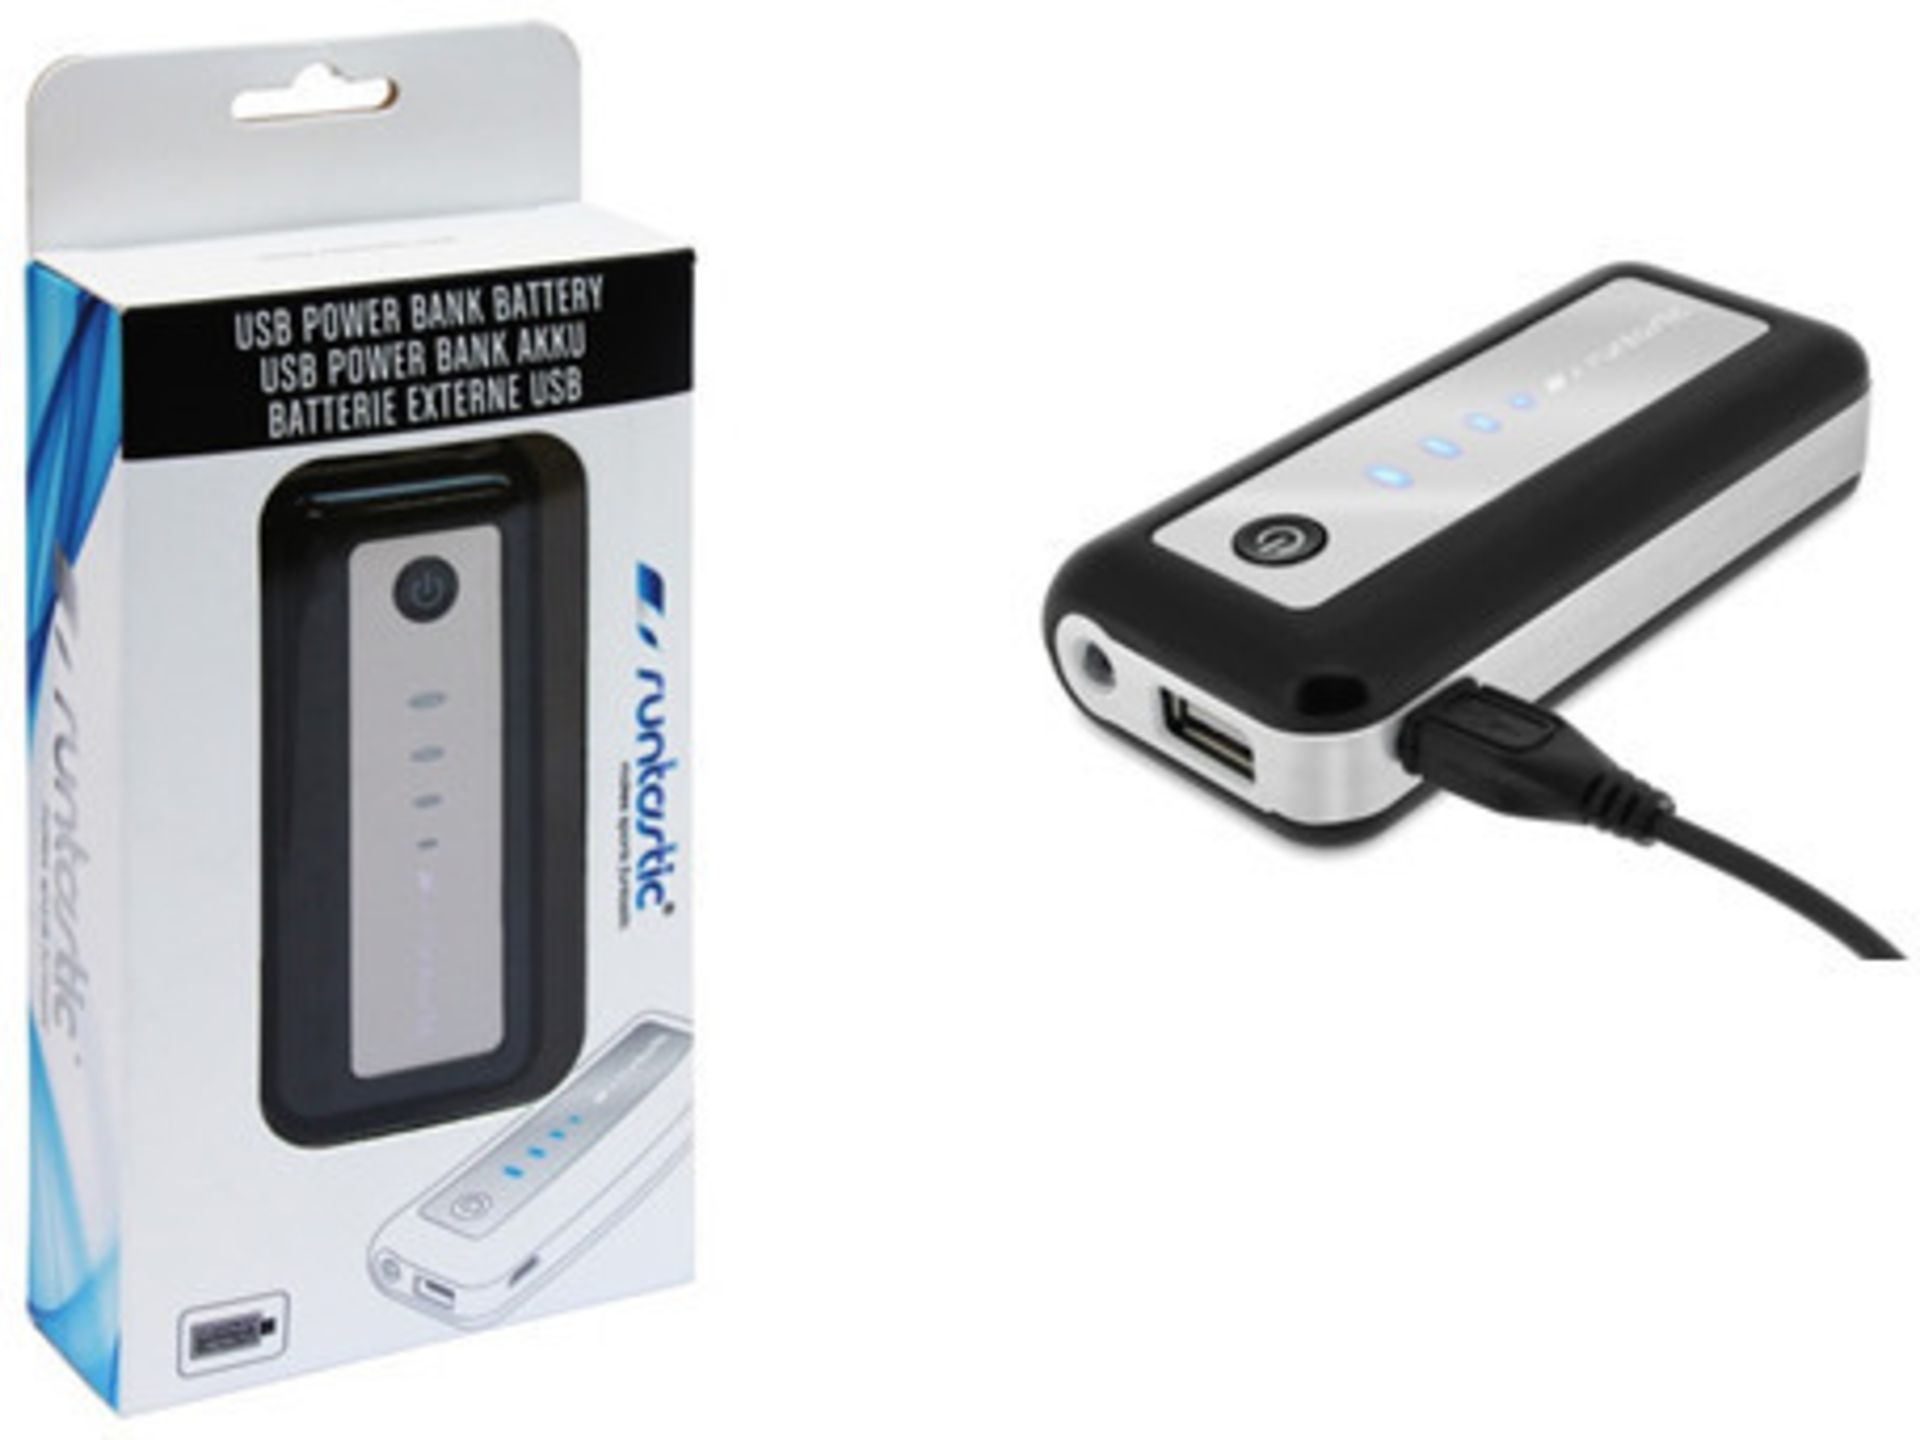 V Brand New Runtastic USB Power Bank With Integrated LED Flashlight eBay Price £43.61